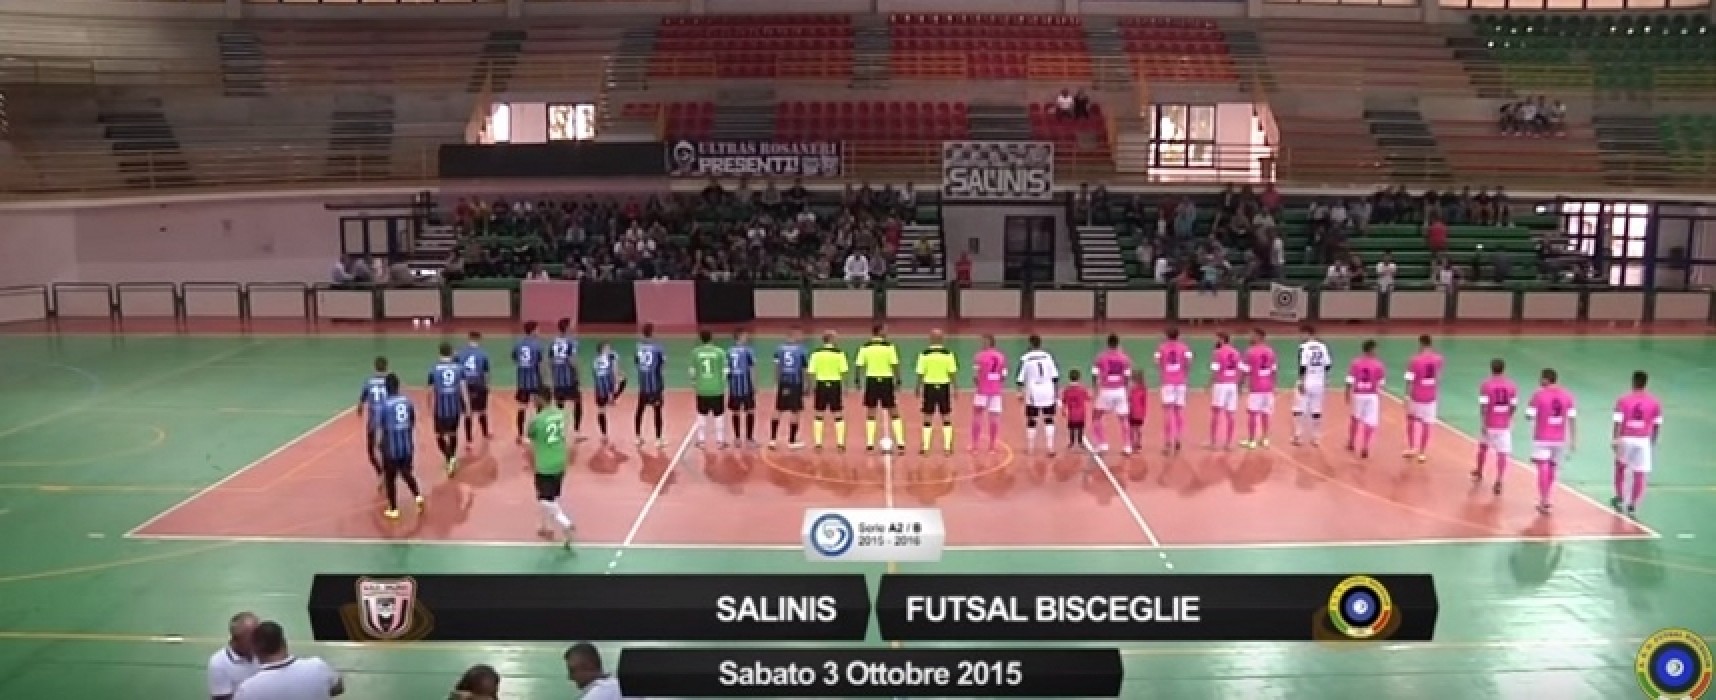 Salinis-Futsal Bisceglie 3-5/ VIDEO HIGHLIGHTS